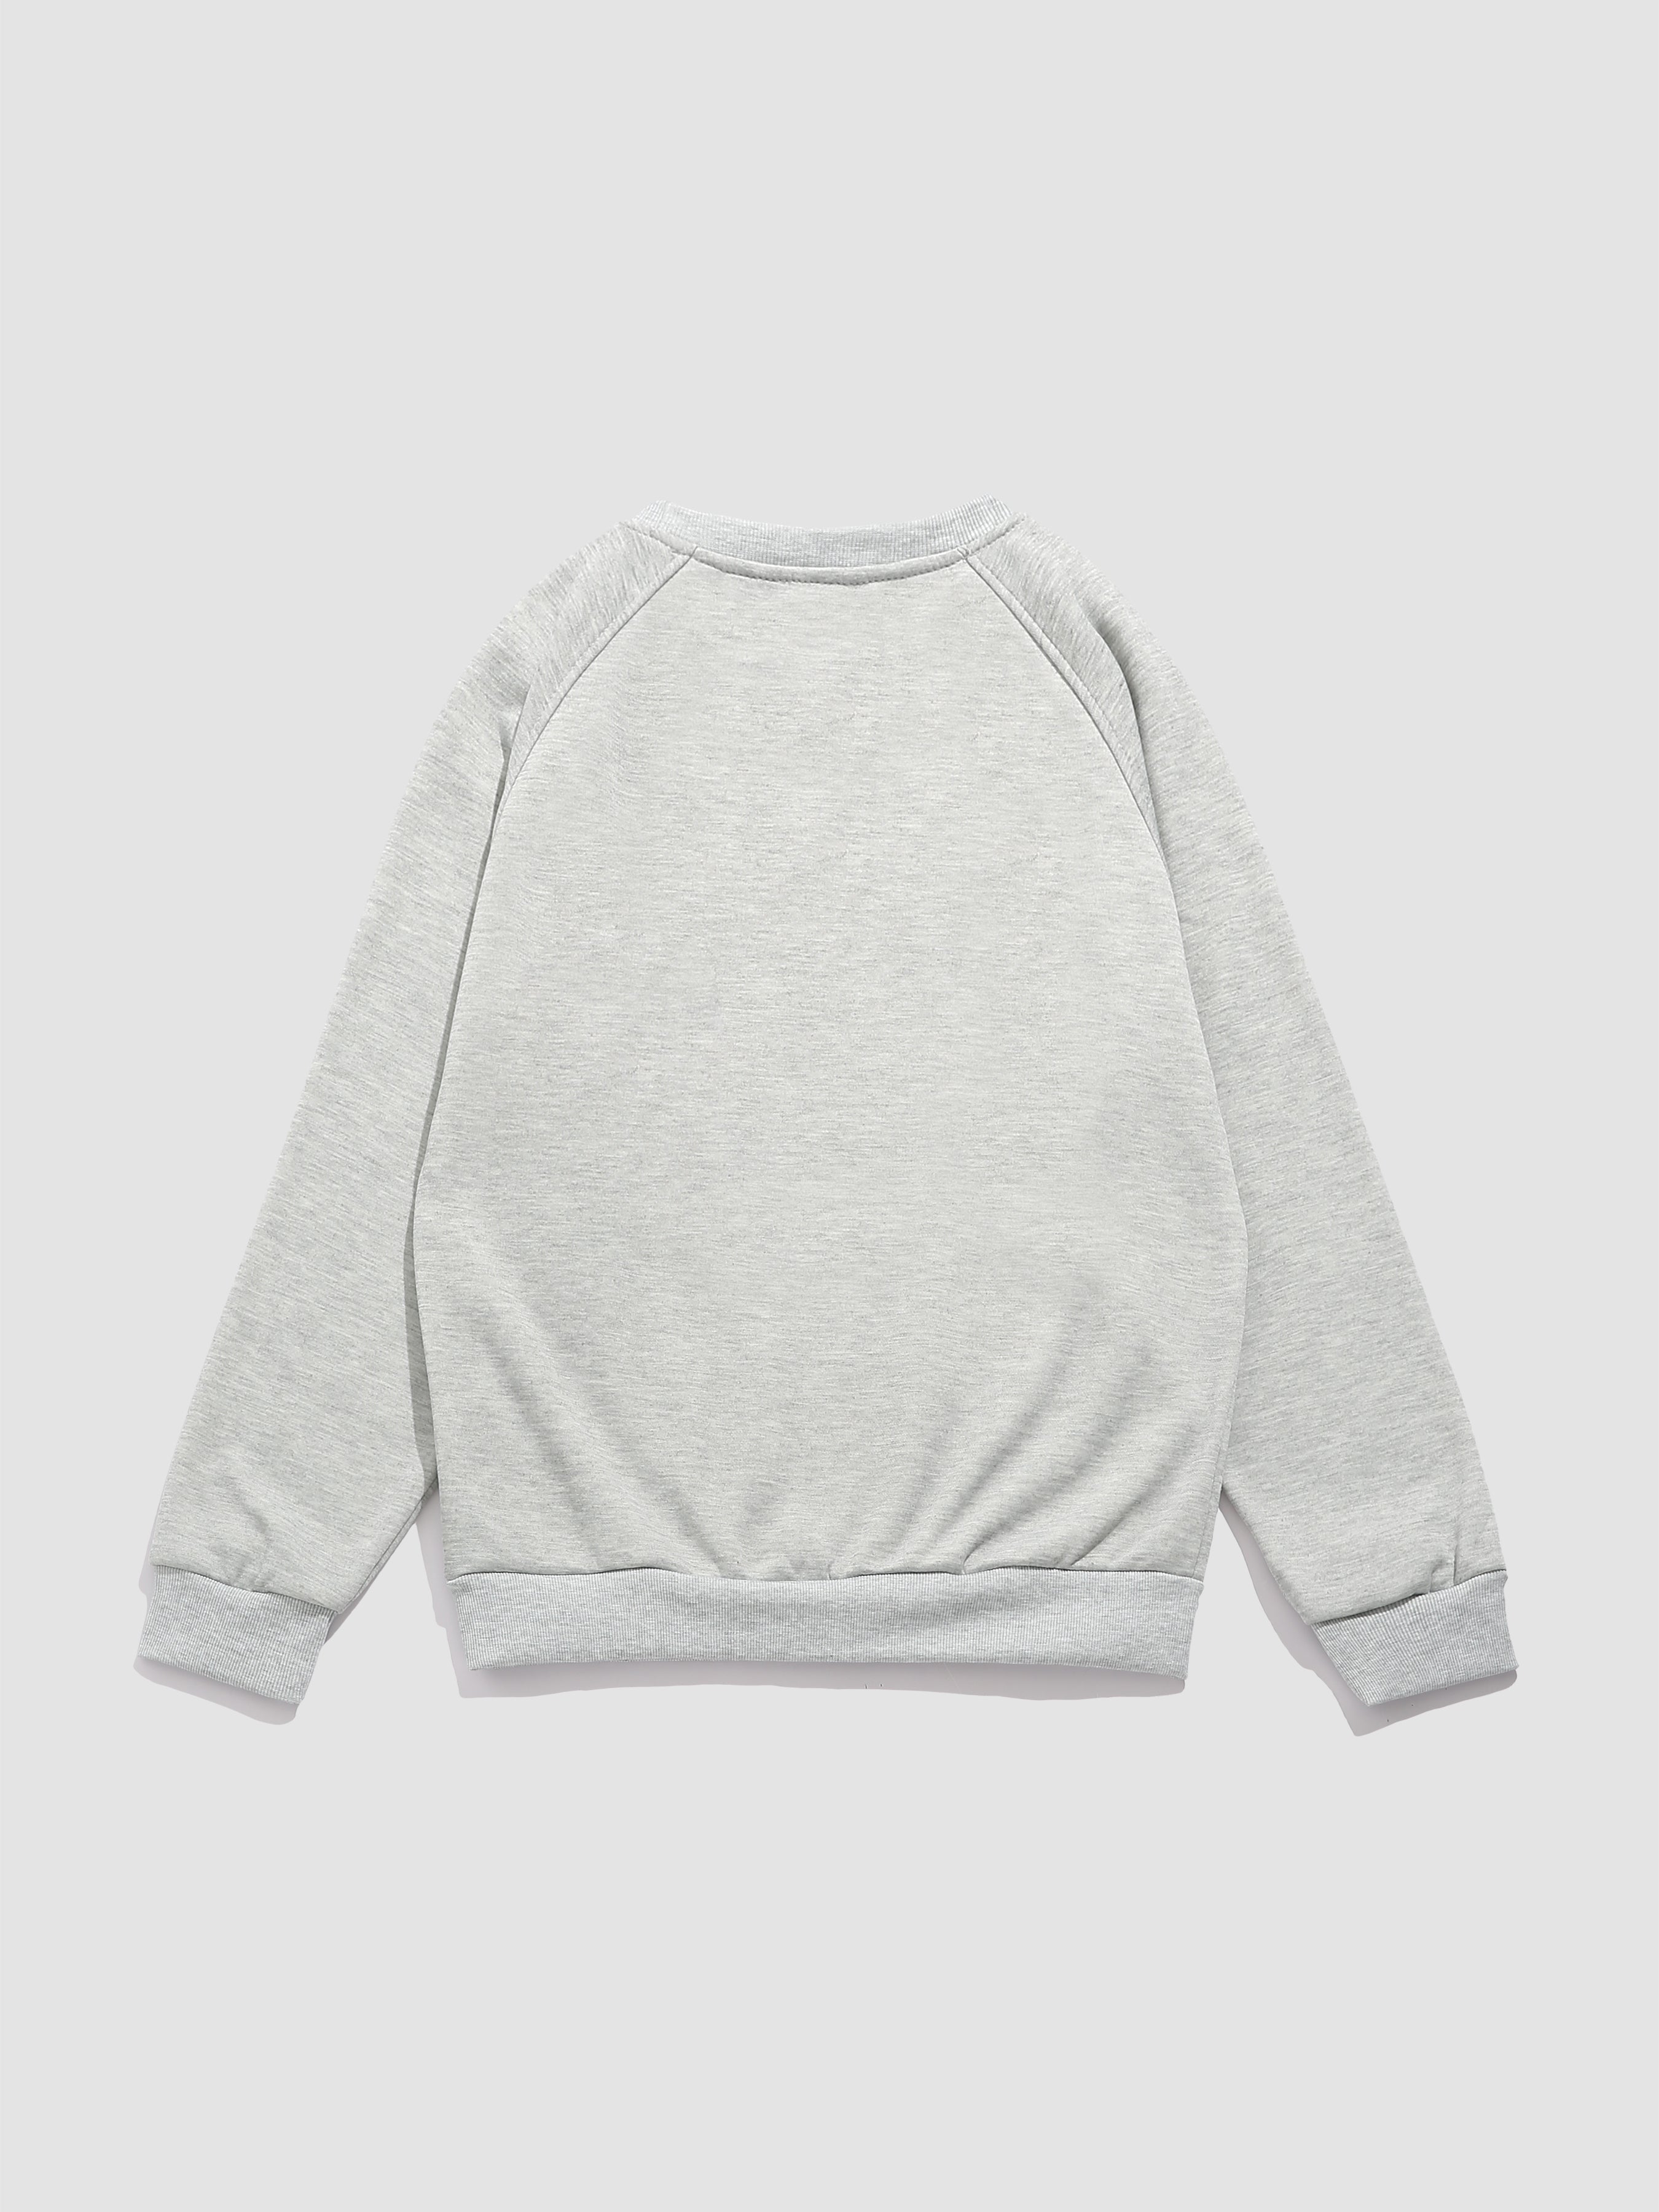 Cute Bear Print Raglan Sleeve Sweatshirt